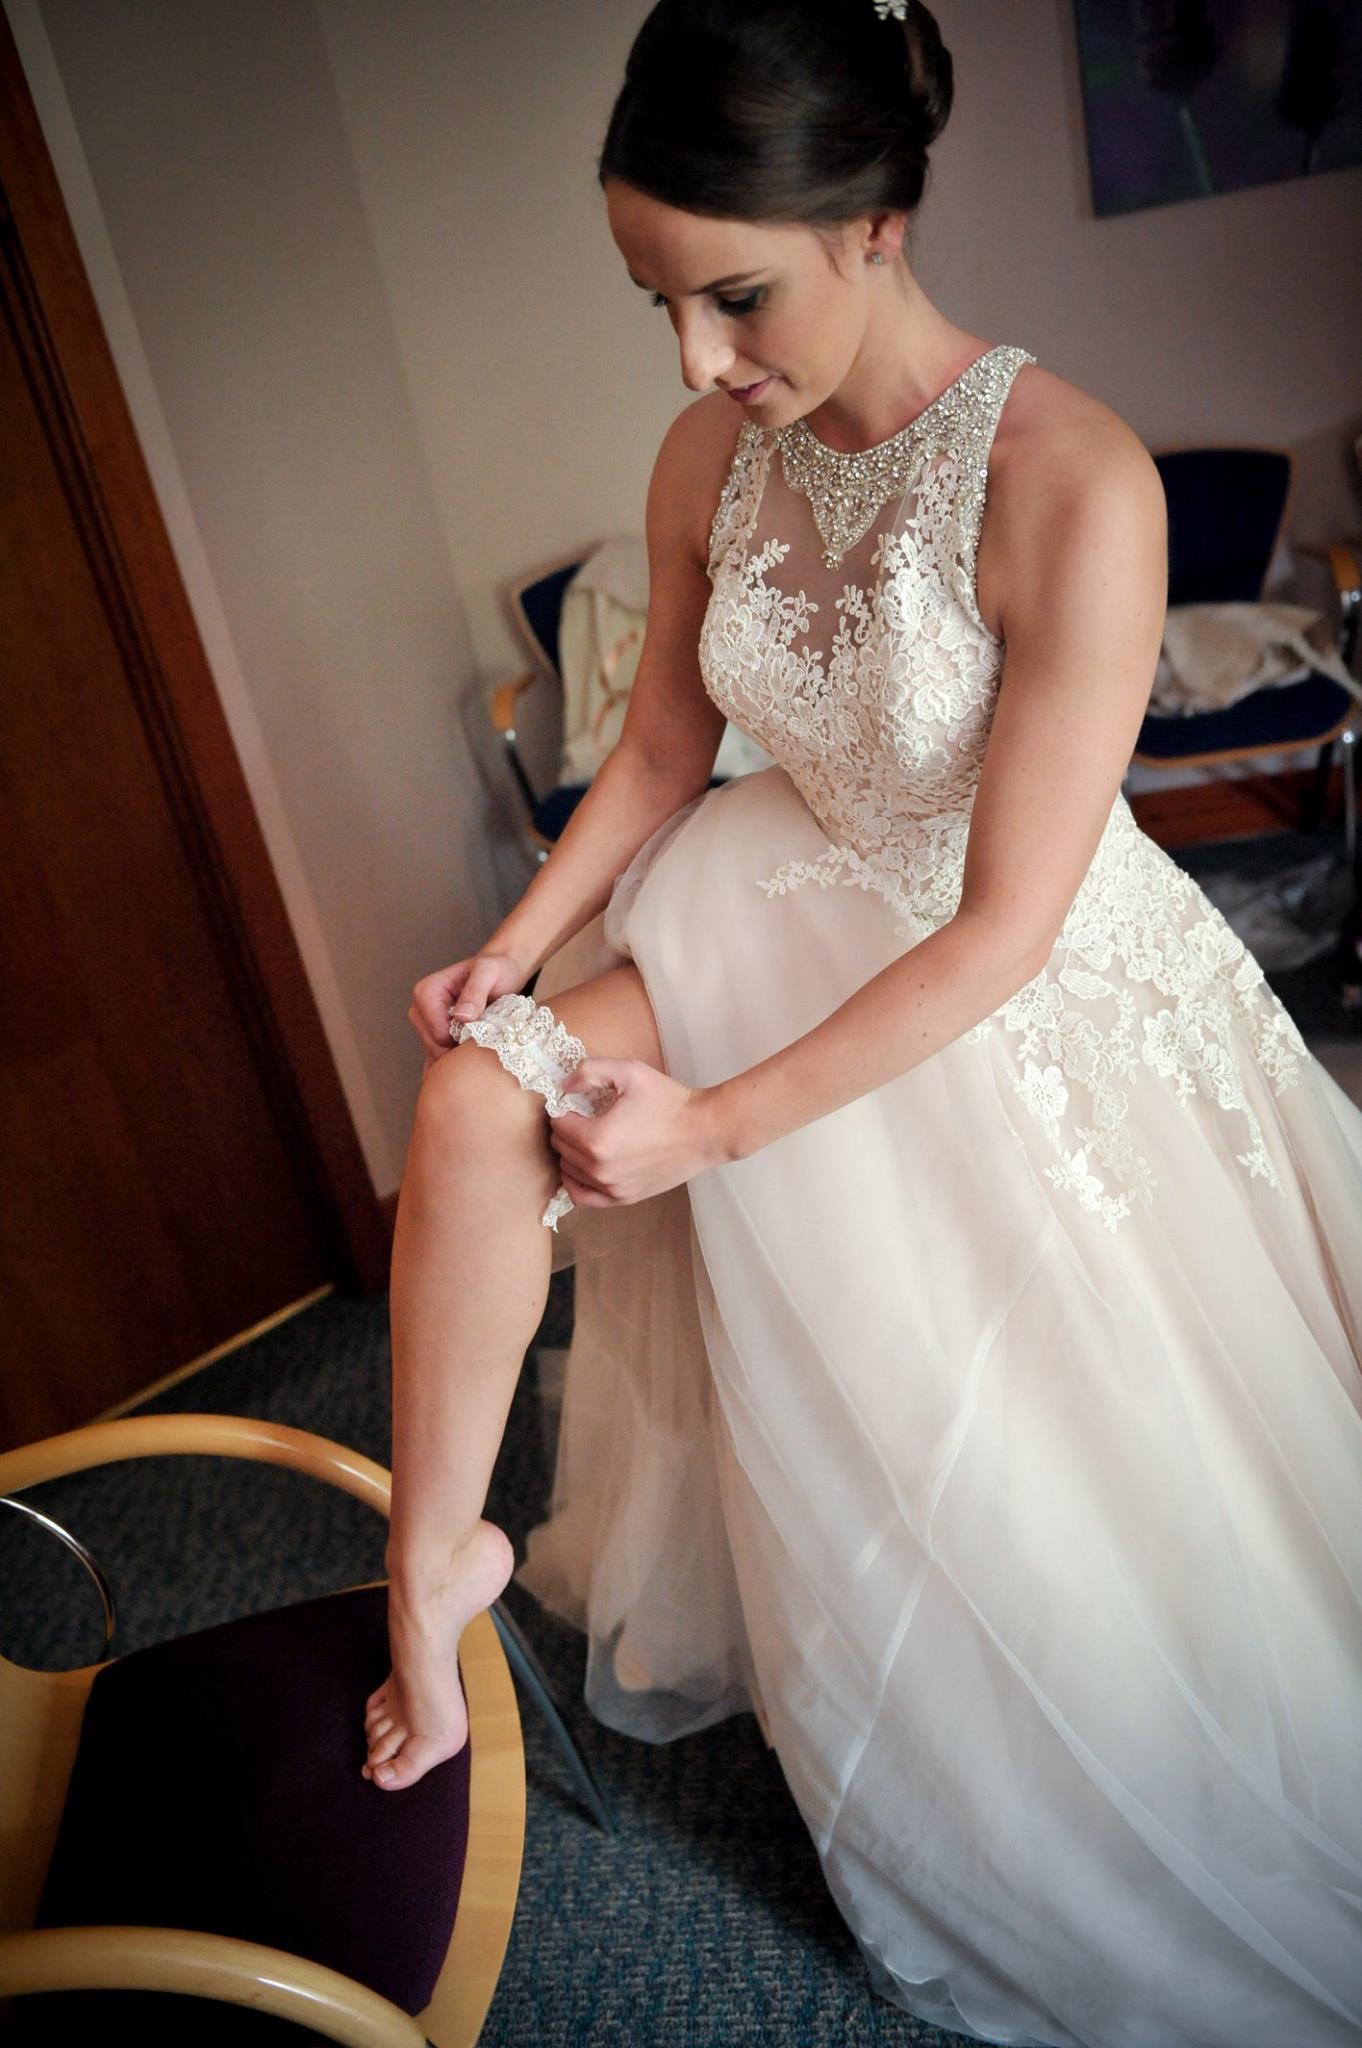 Wedding Garter FAQ's answered by luxury wedding garter specialist